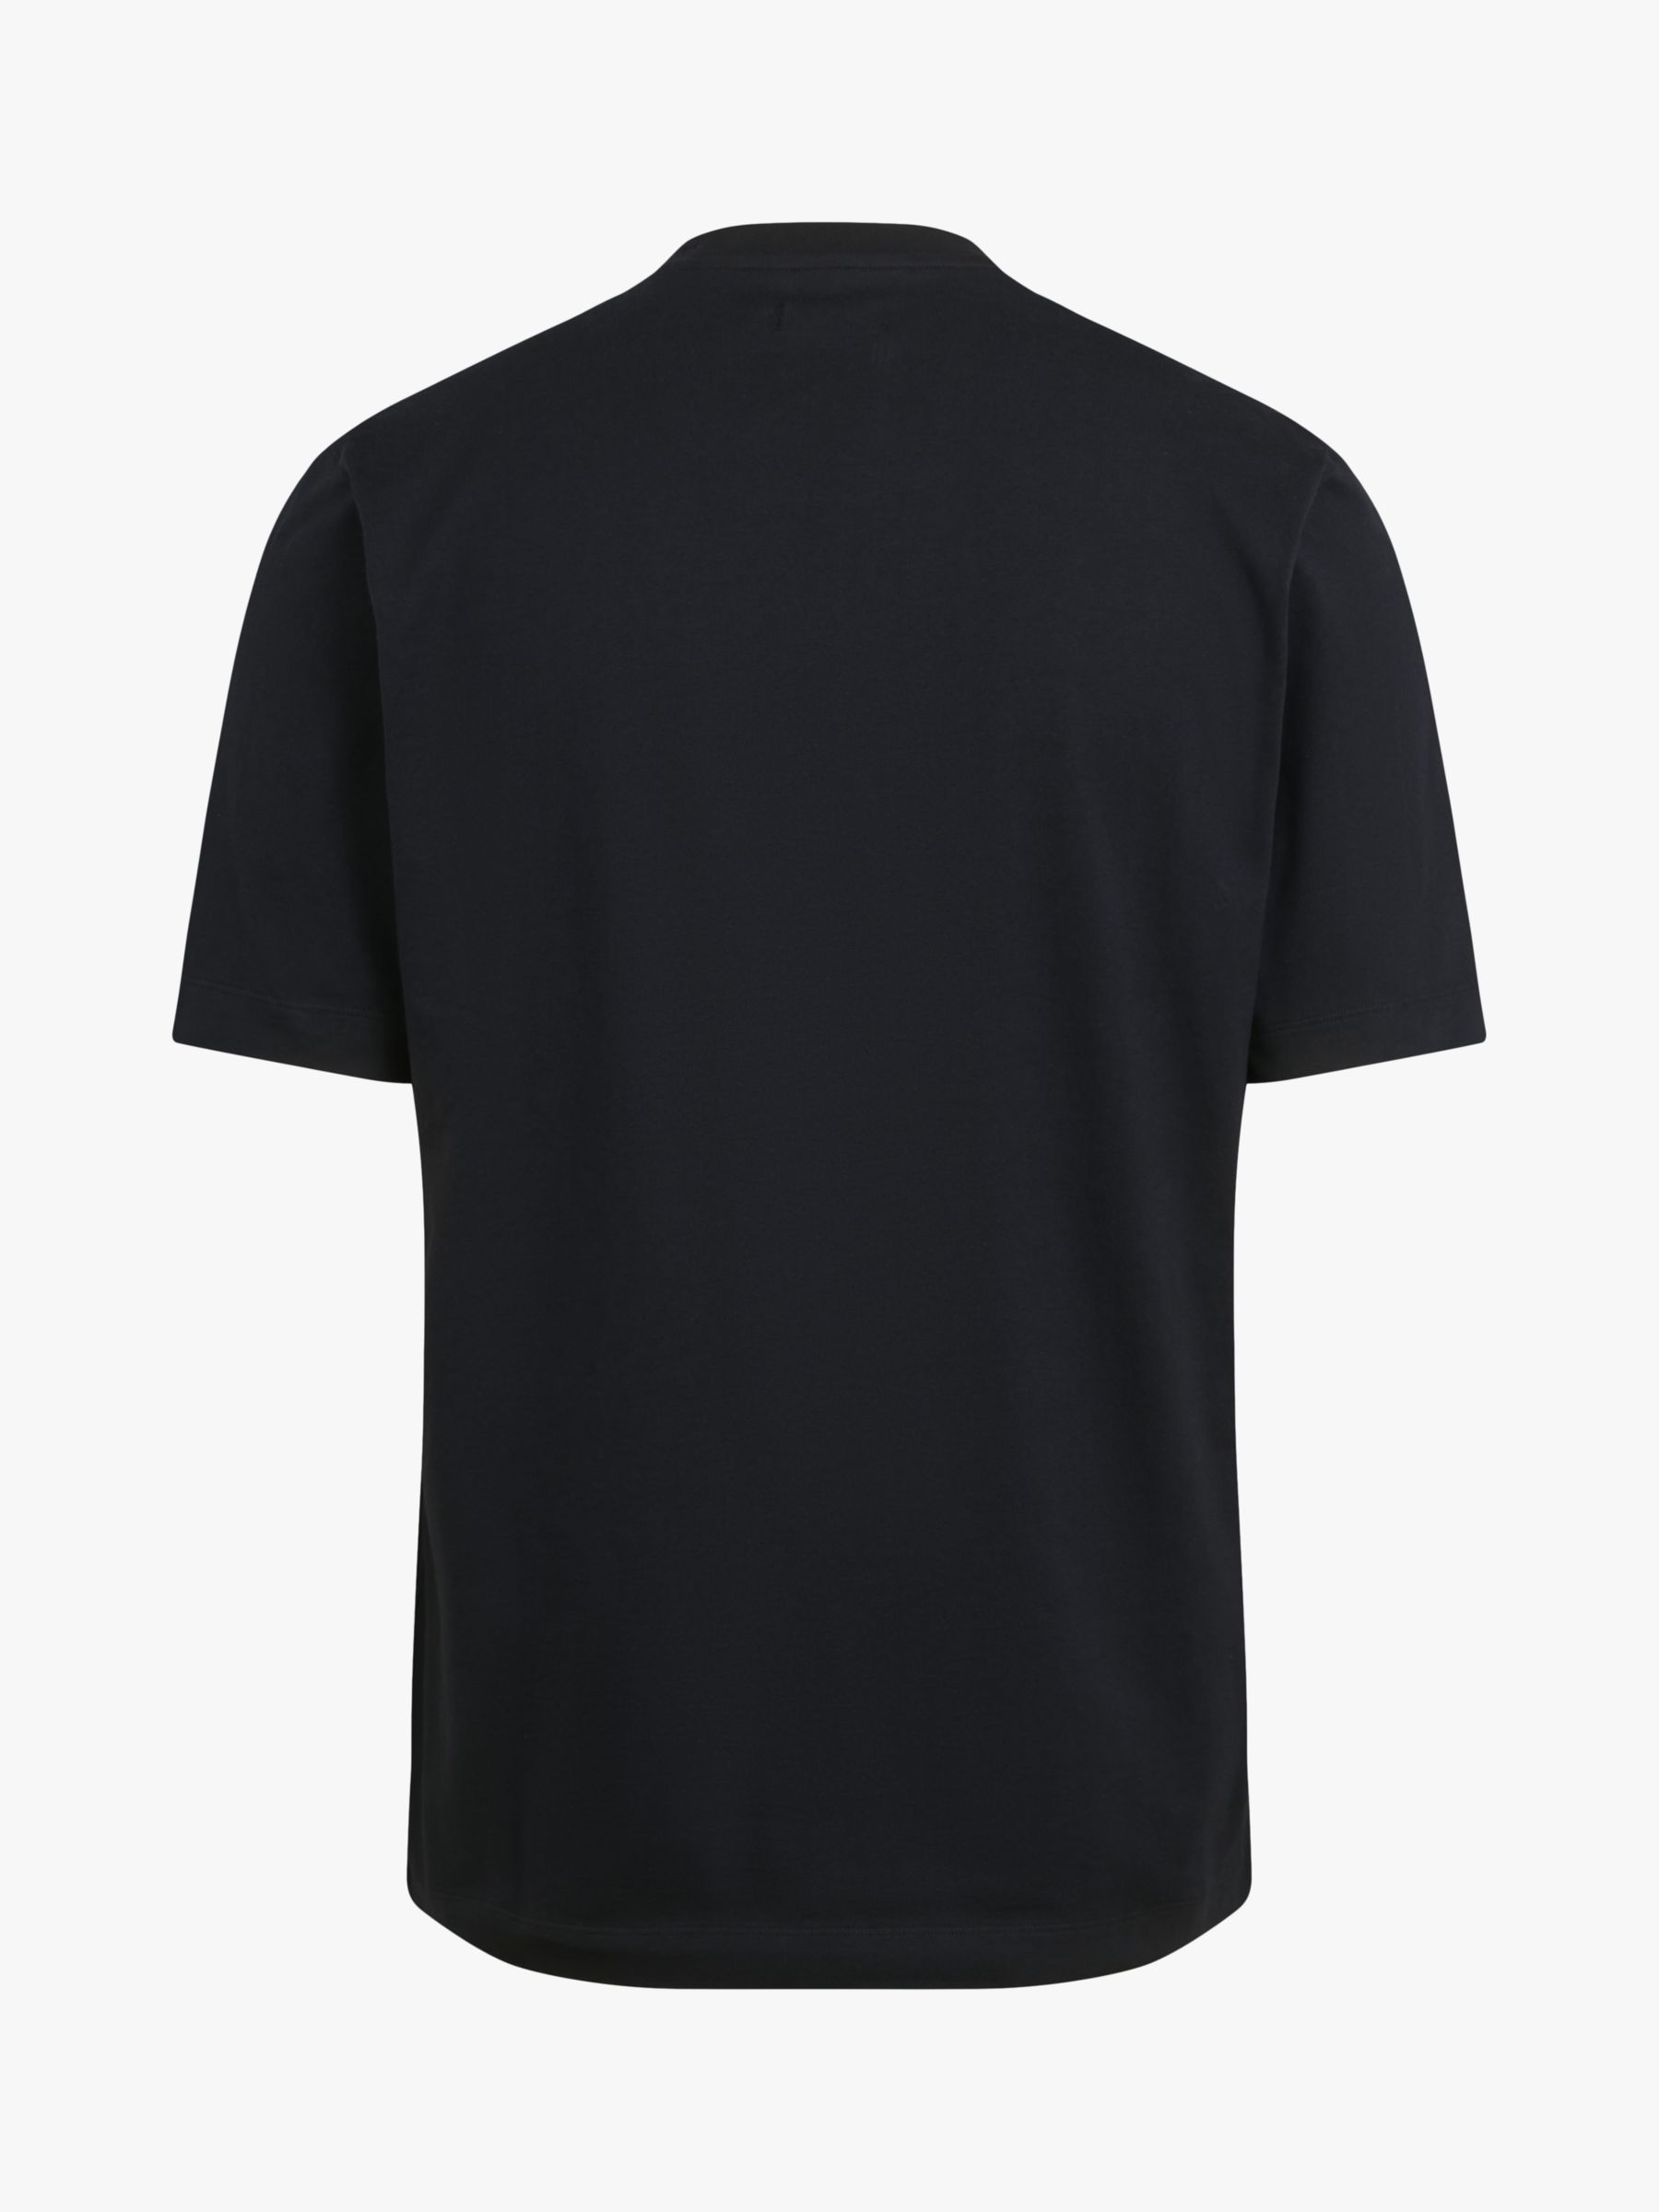 Rapha Chain Stitched Logo T-Shirt, Black/White, S